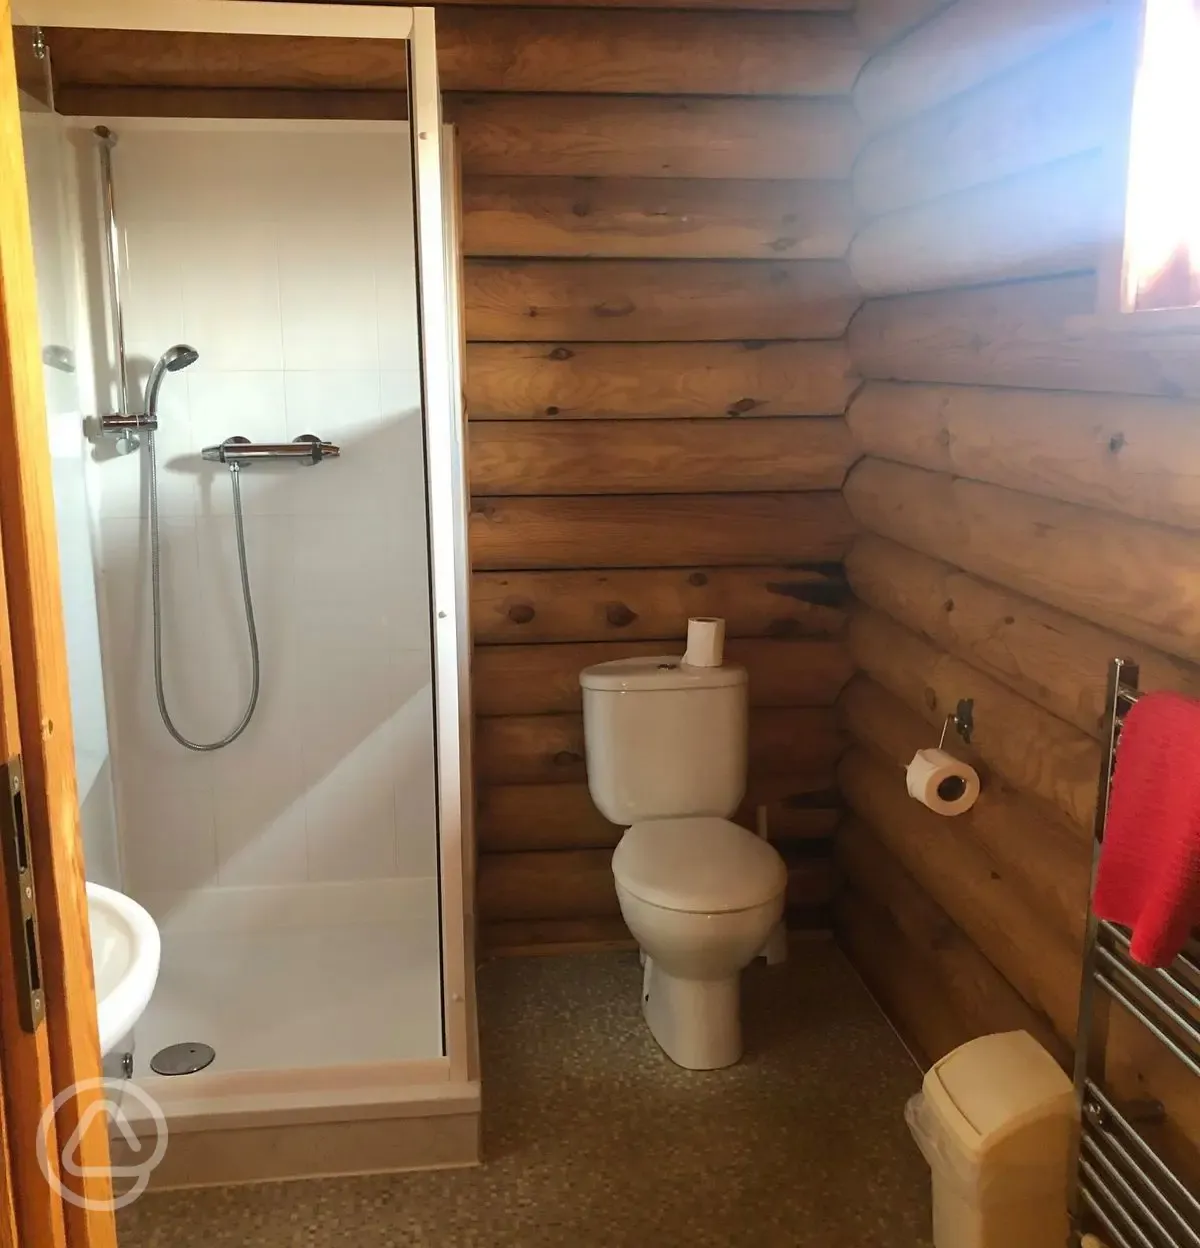 Log cabin shower and bathroom